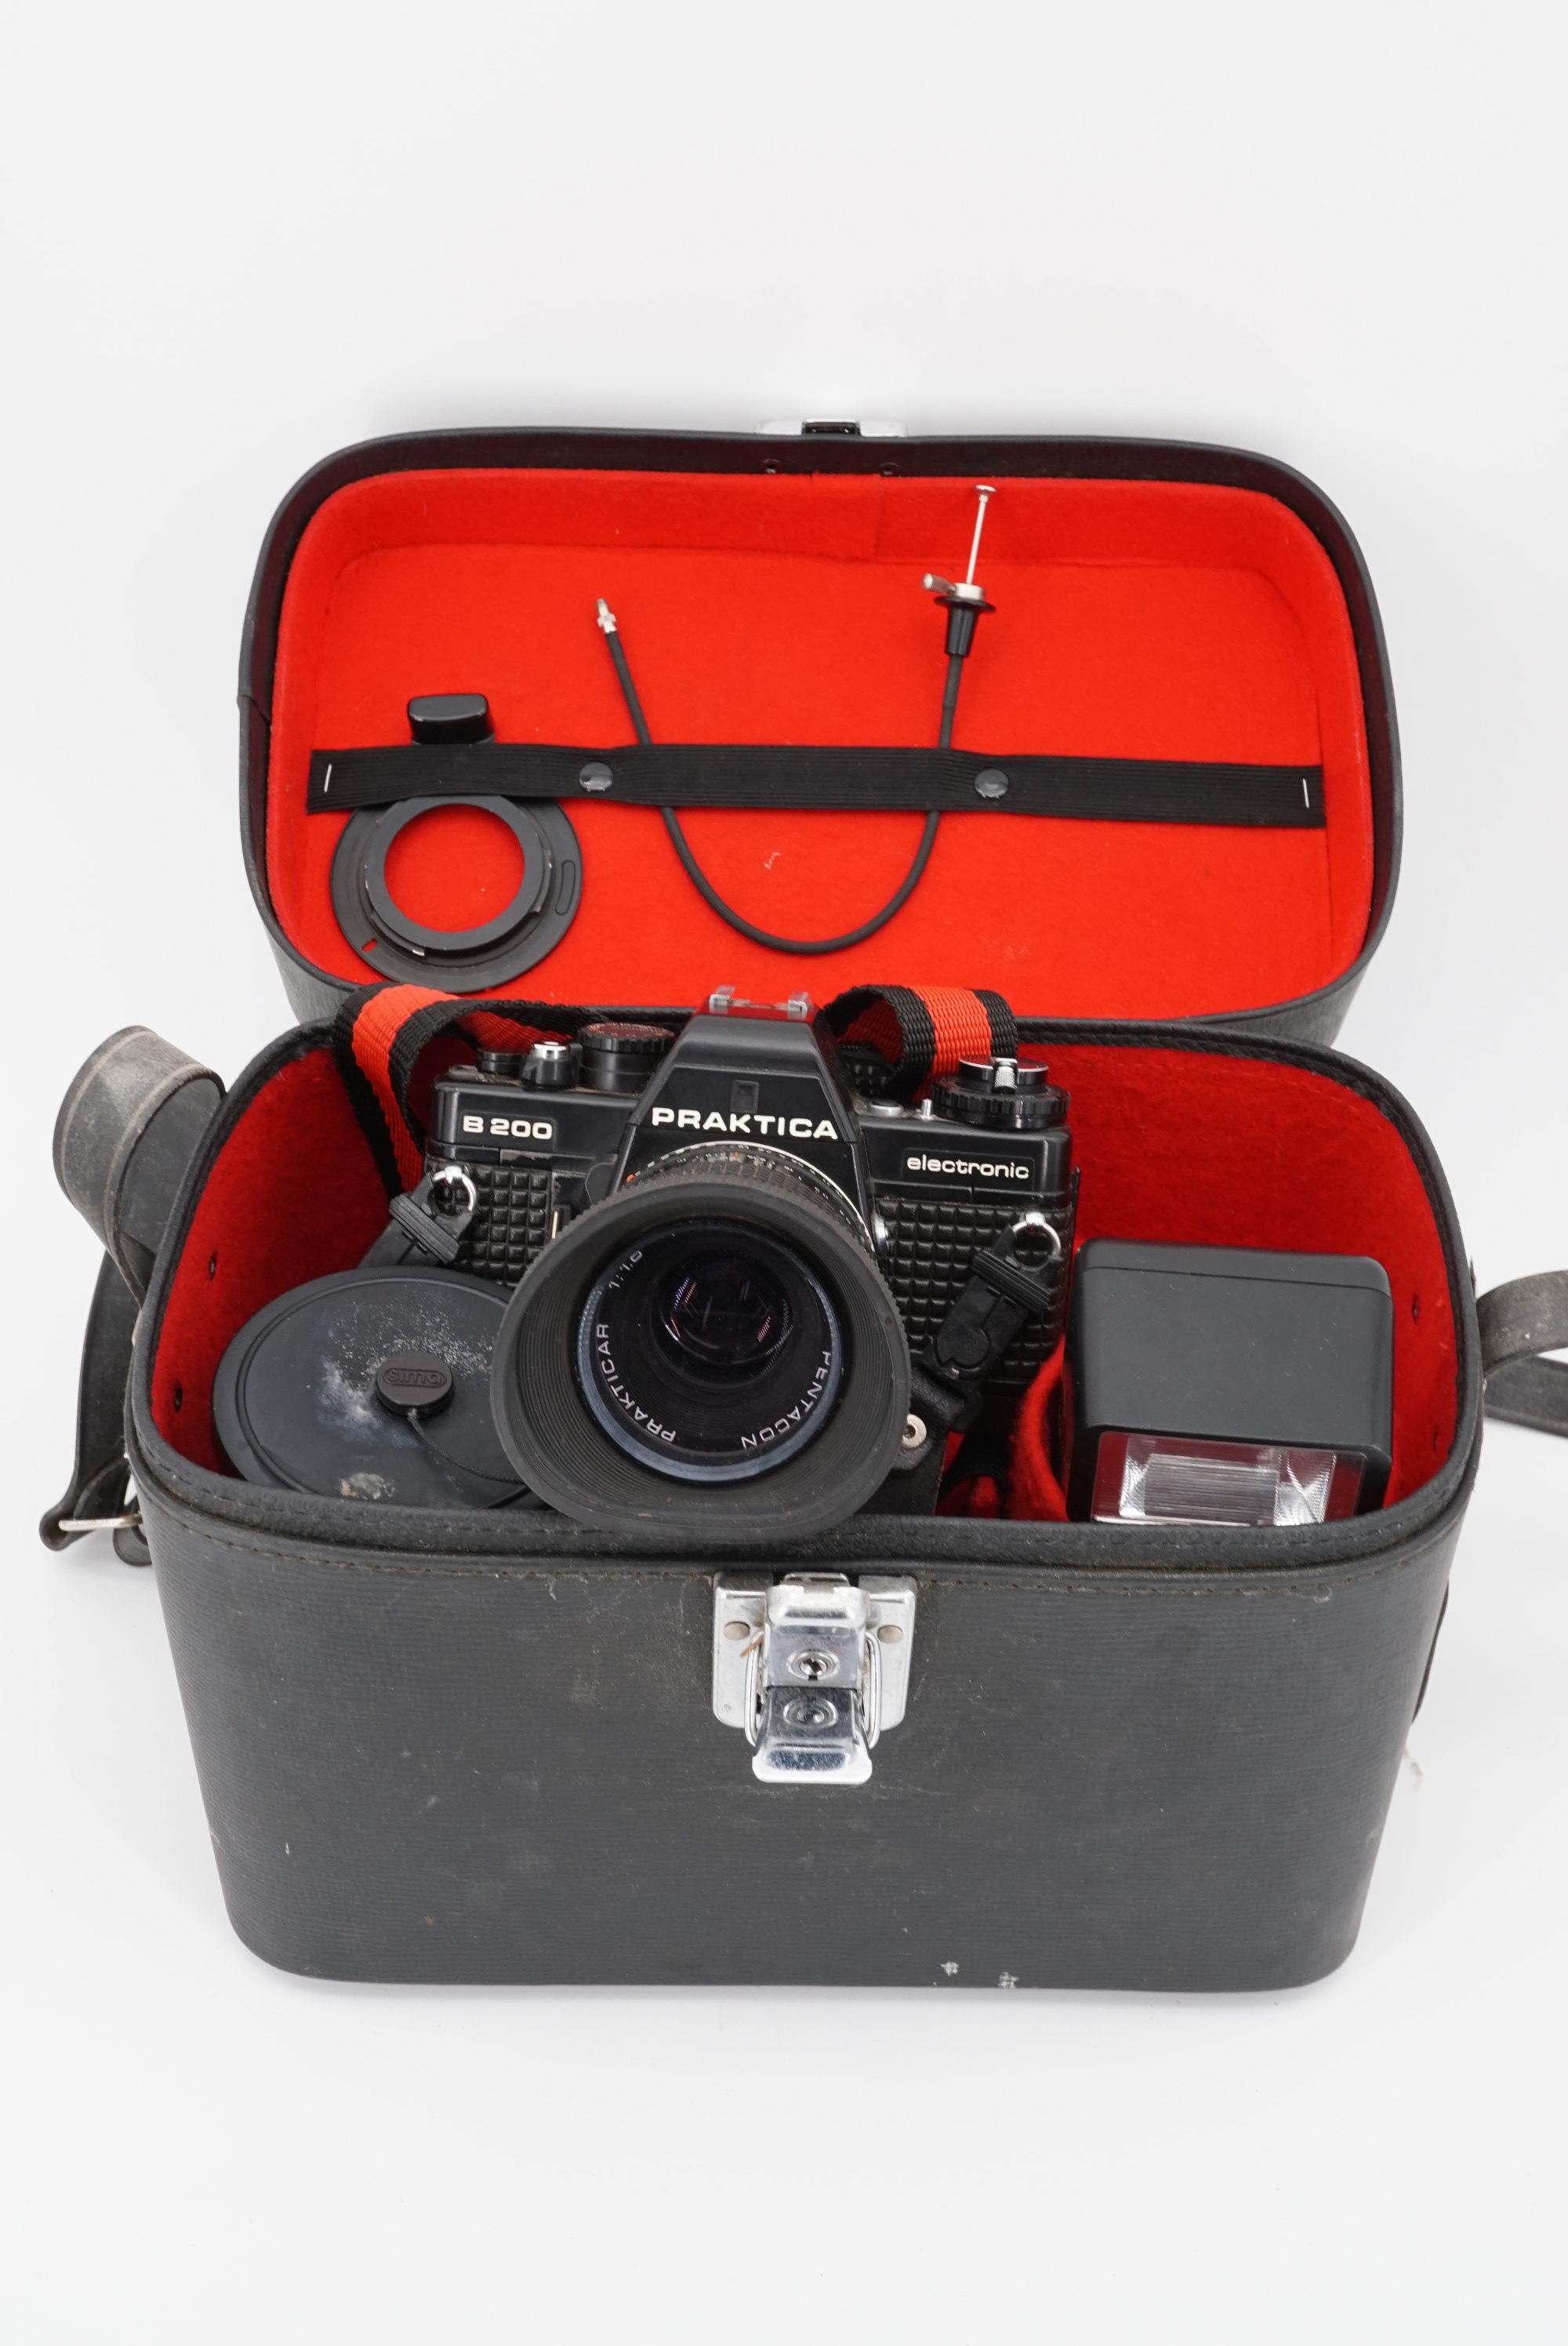 A Praktica B200 camera, Sunpak MX118 flash gun and Hoya 37 mm - 105 mm 1:3.5 lens